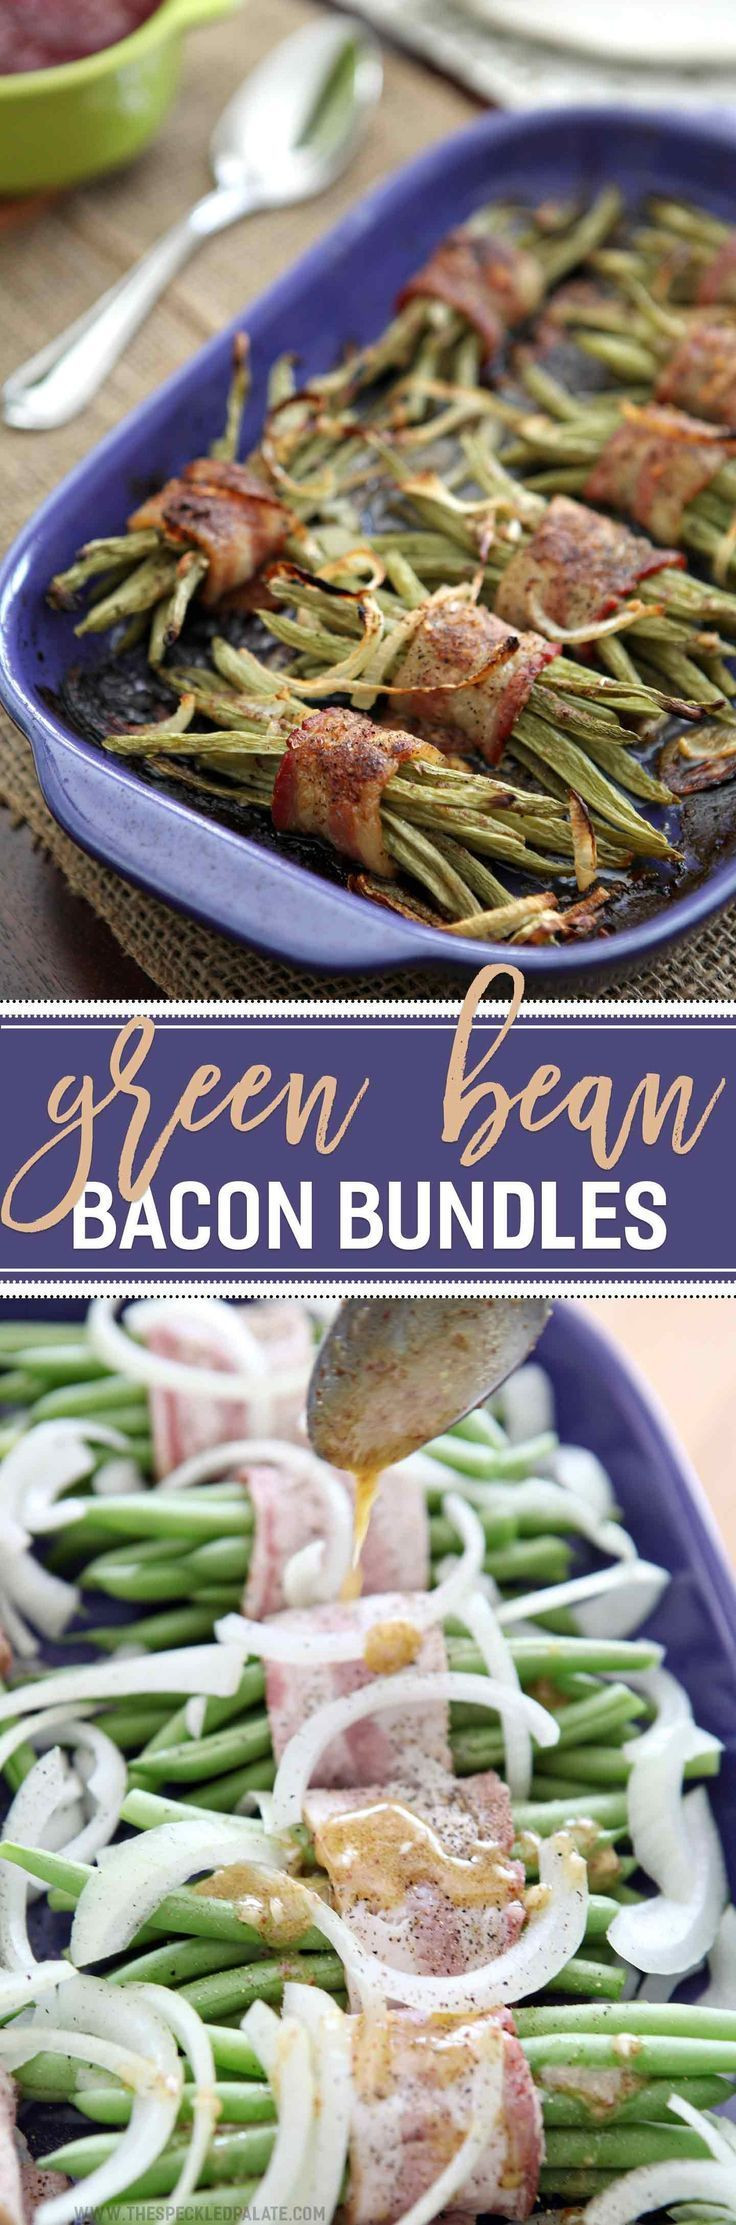 Green Thanksgiving Side Dishes
 17 Best ideas about Green Bean Bundles on Pinterest